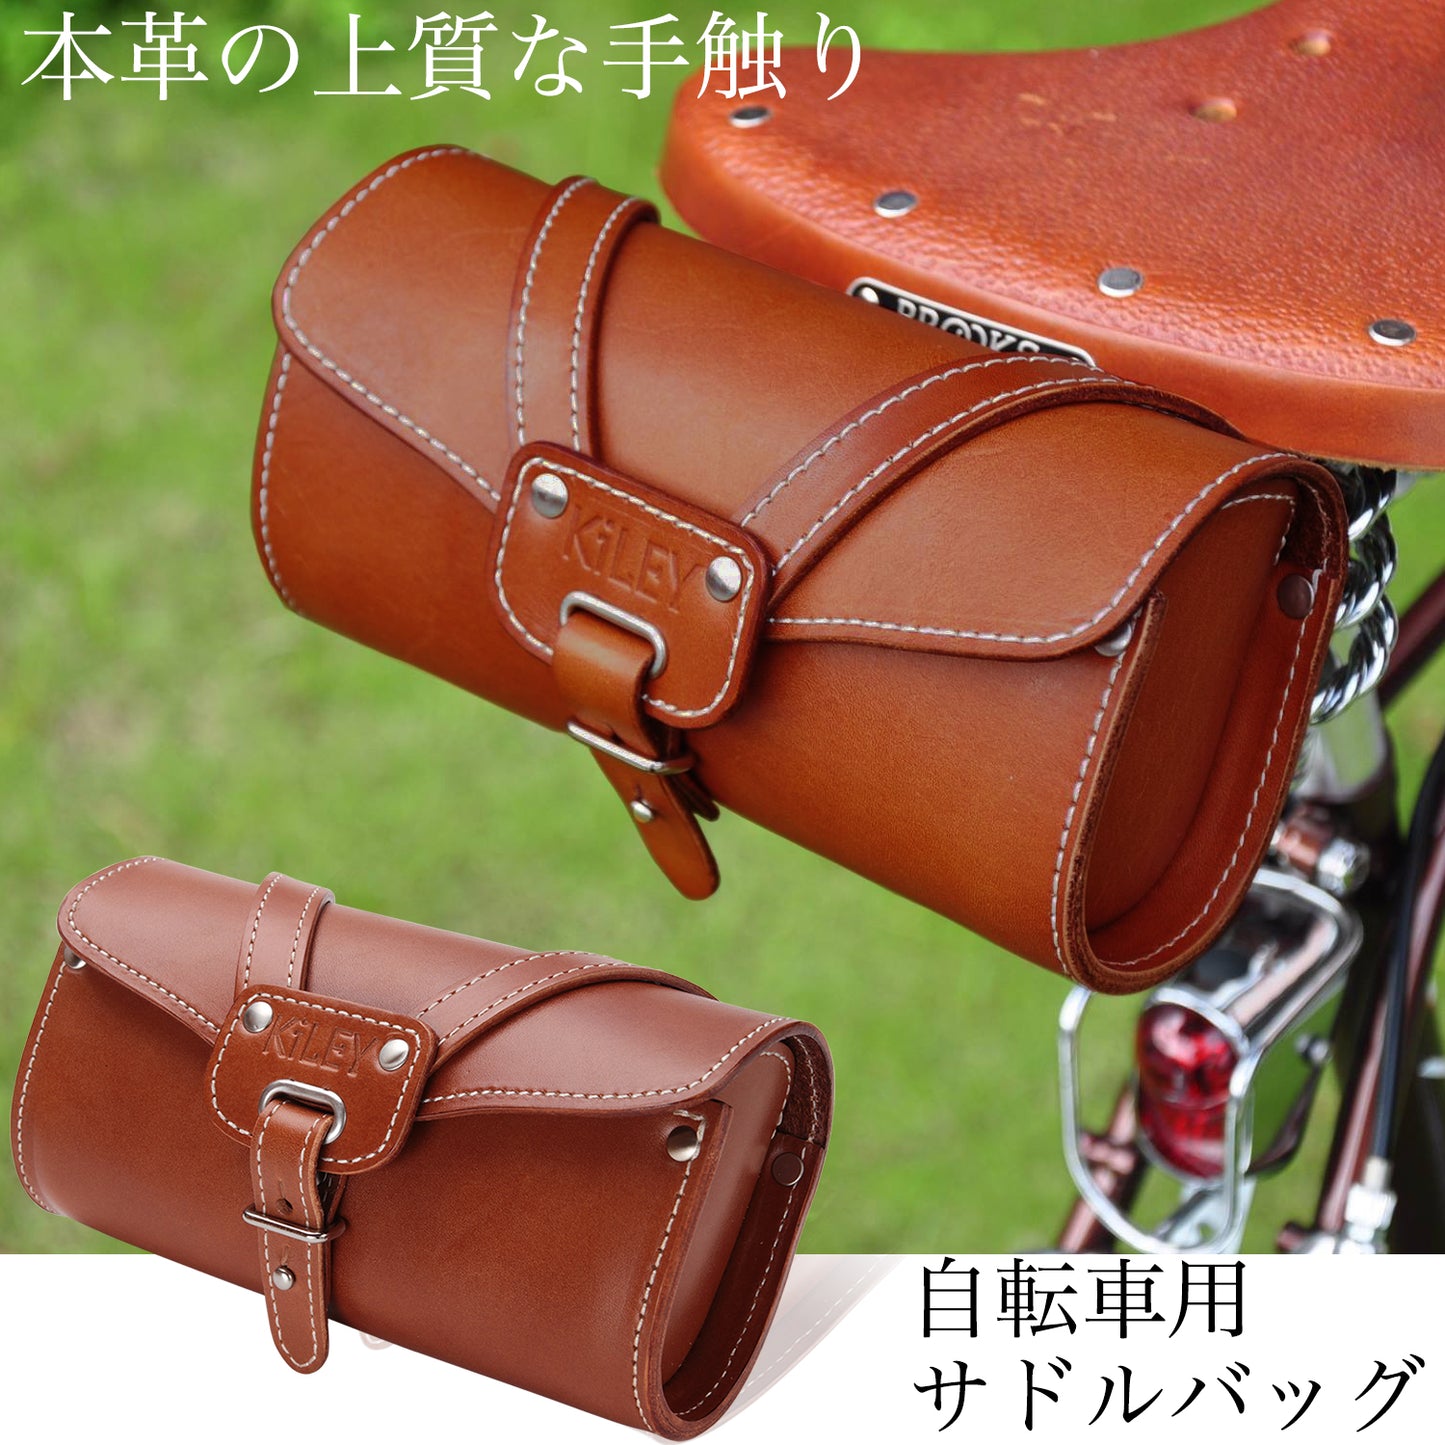 KiLEY cowhide leather bag LM-559